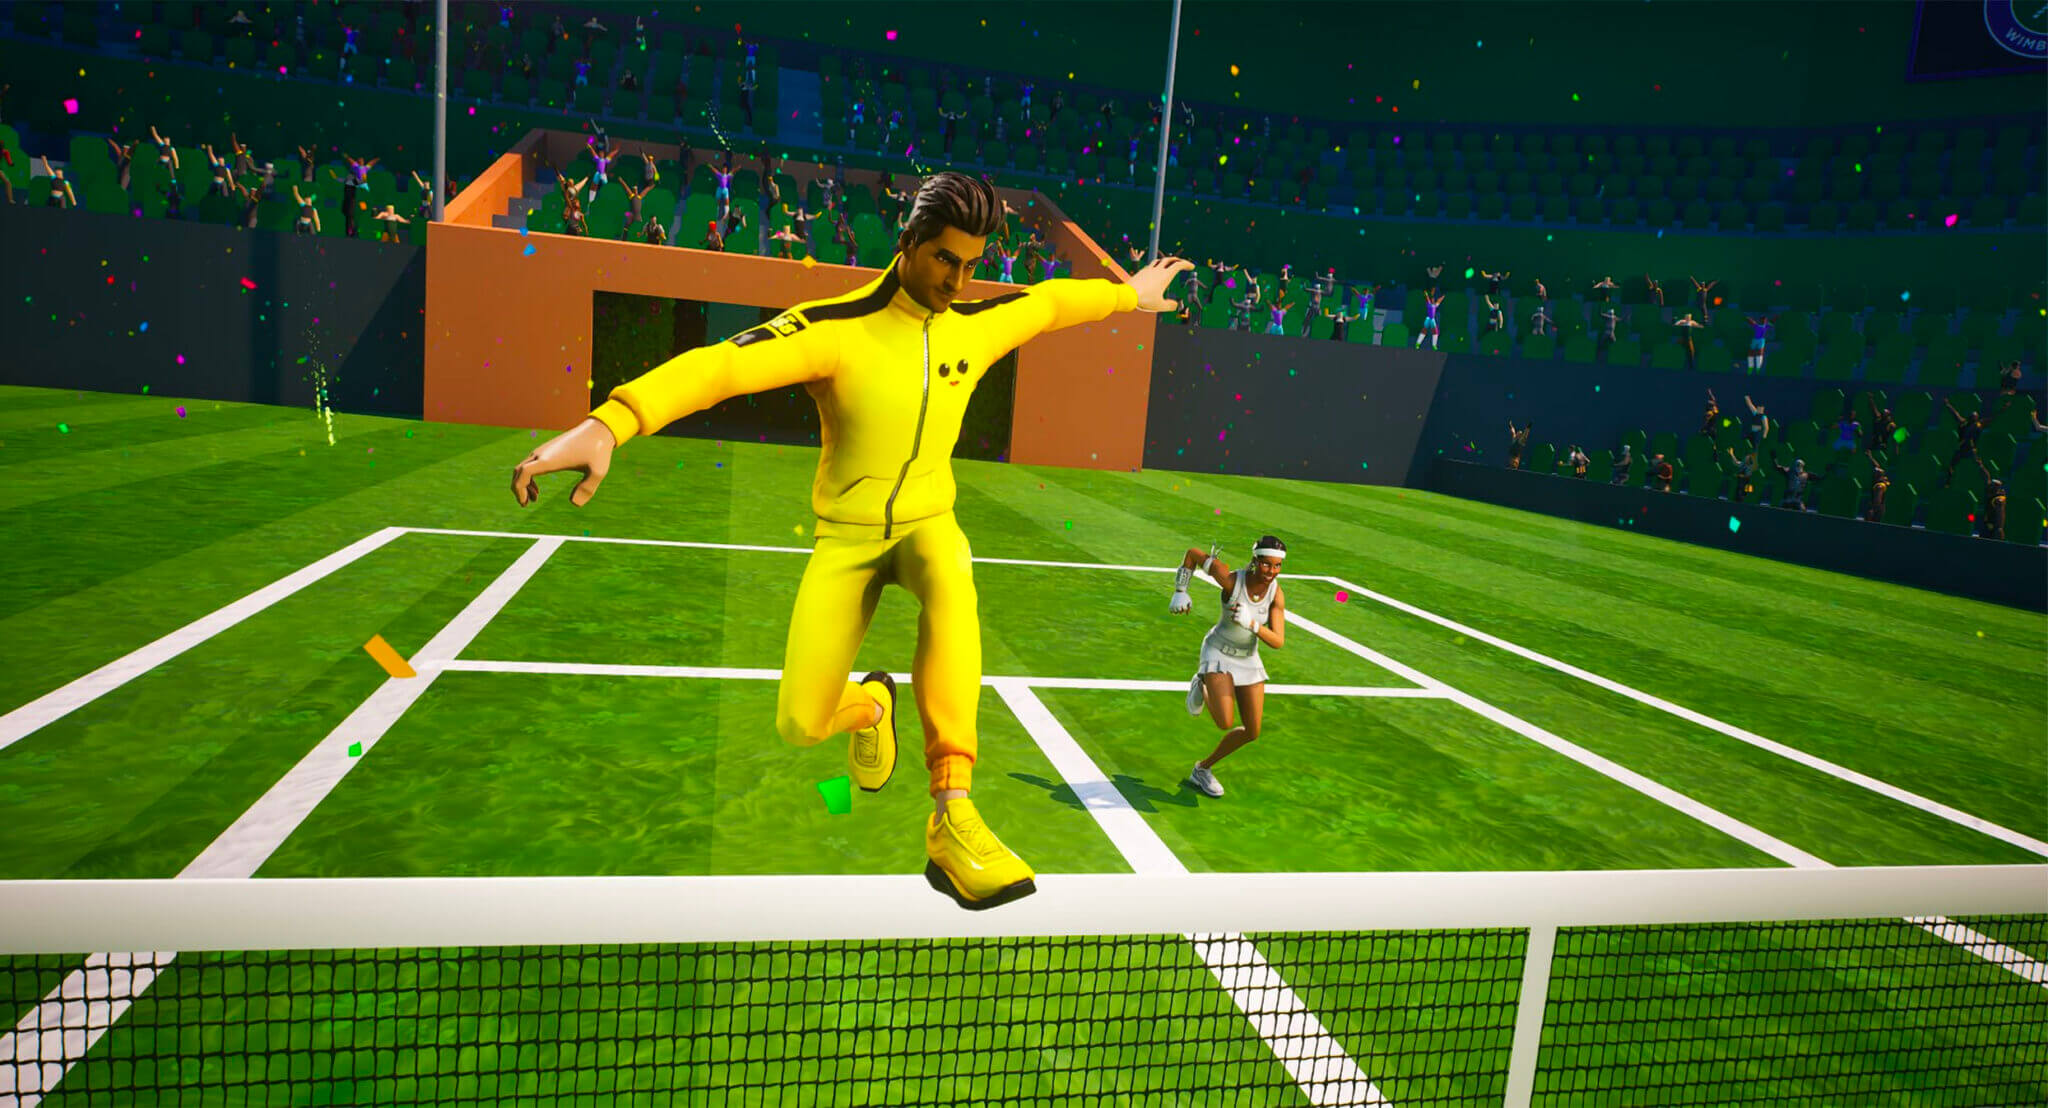 Character jumping over tennis net